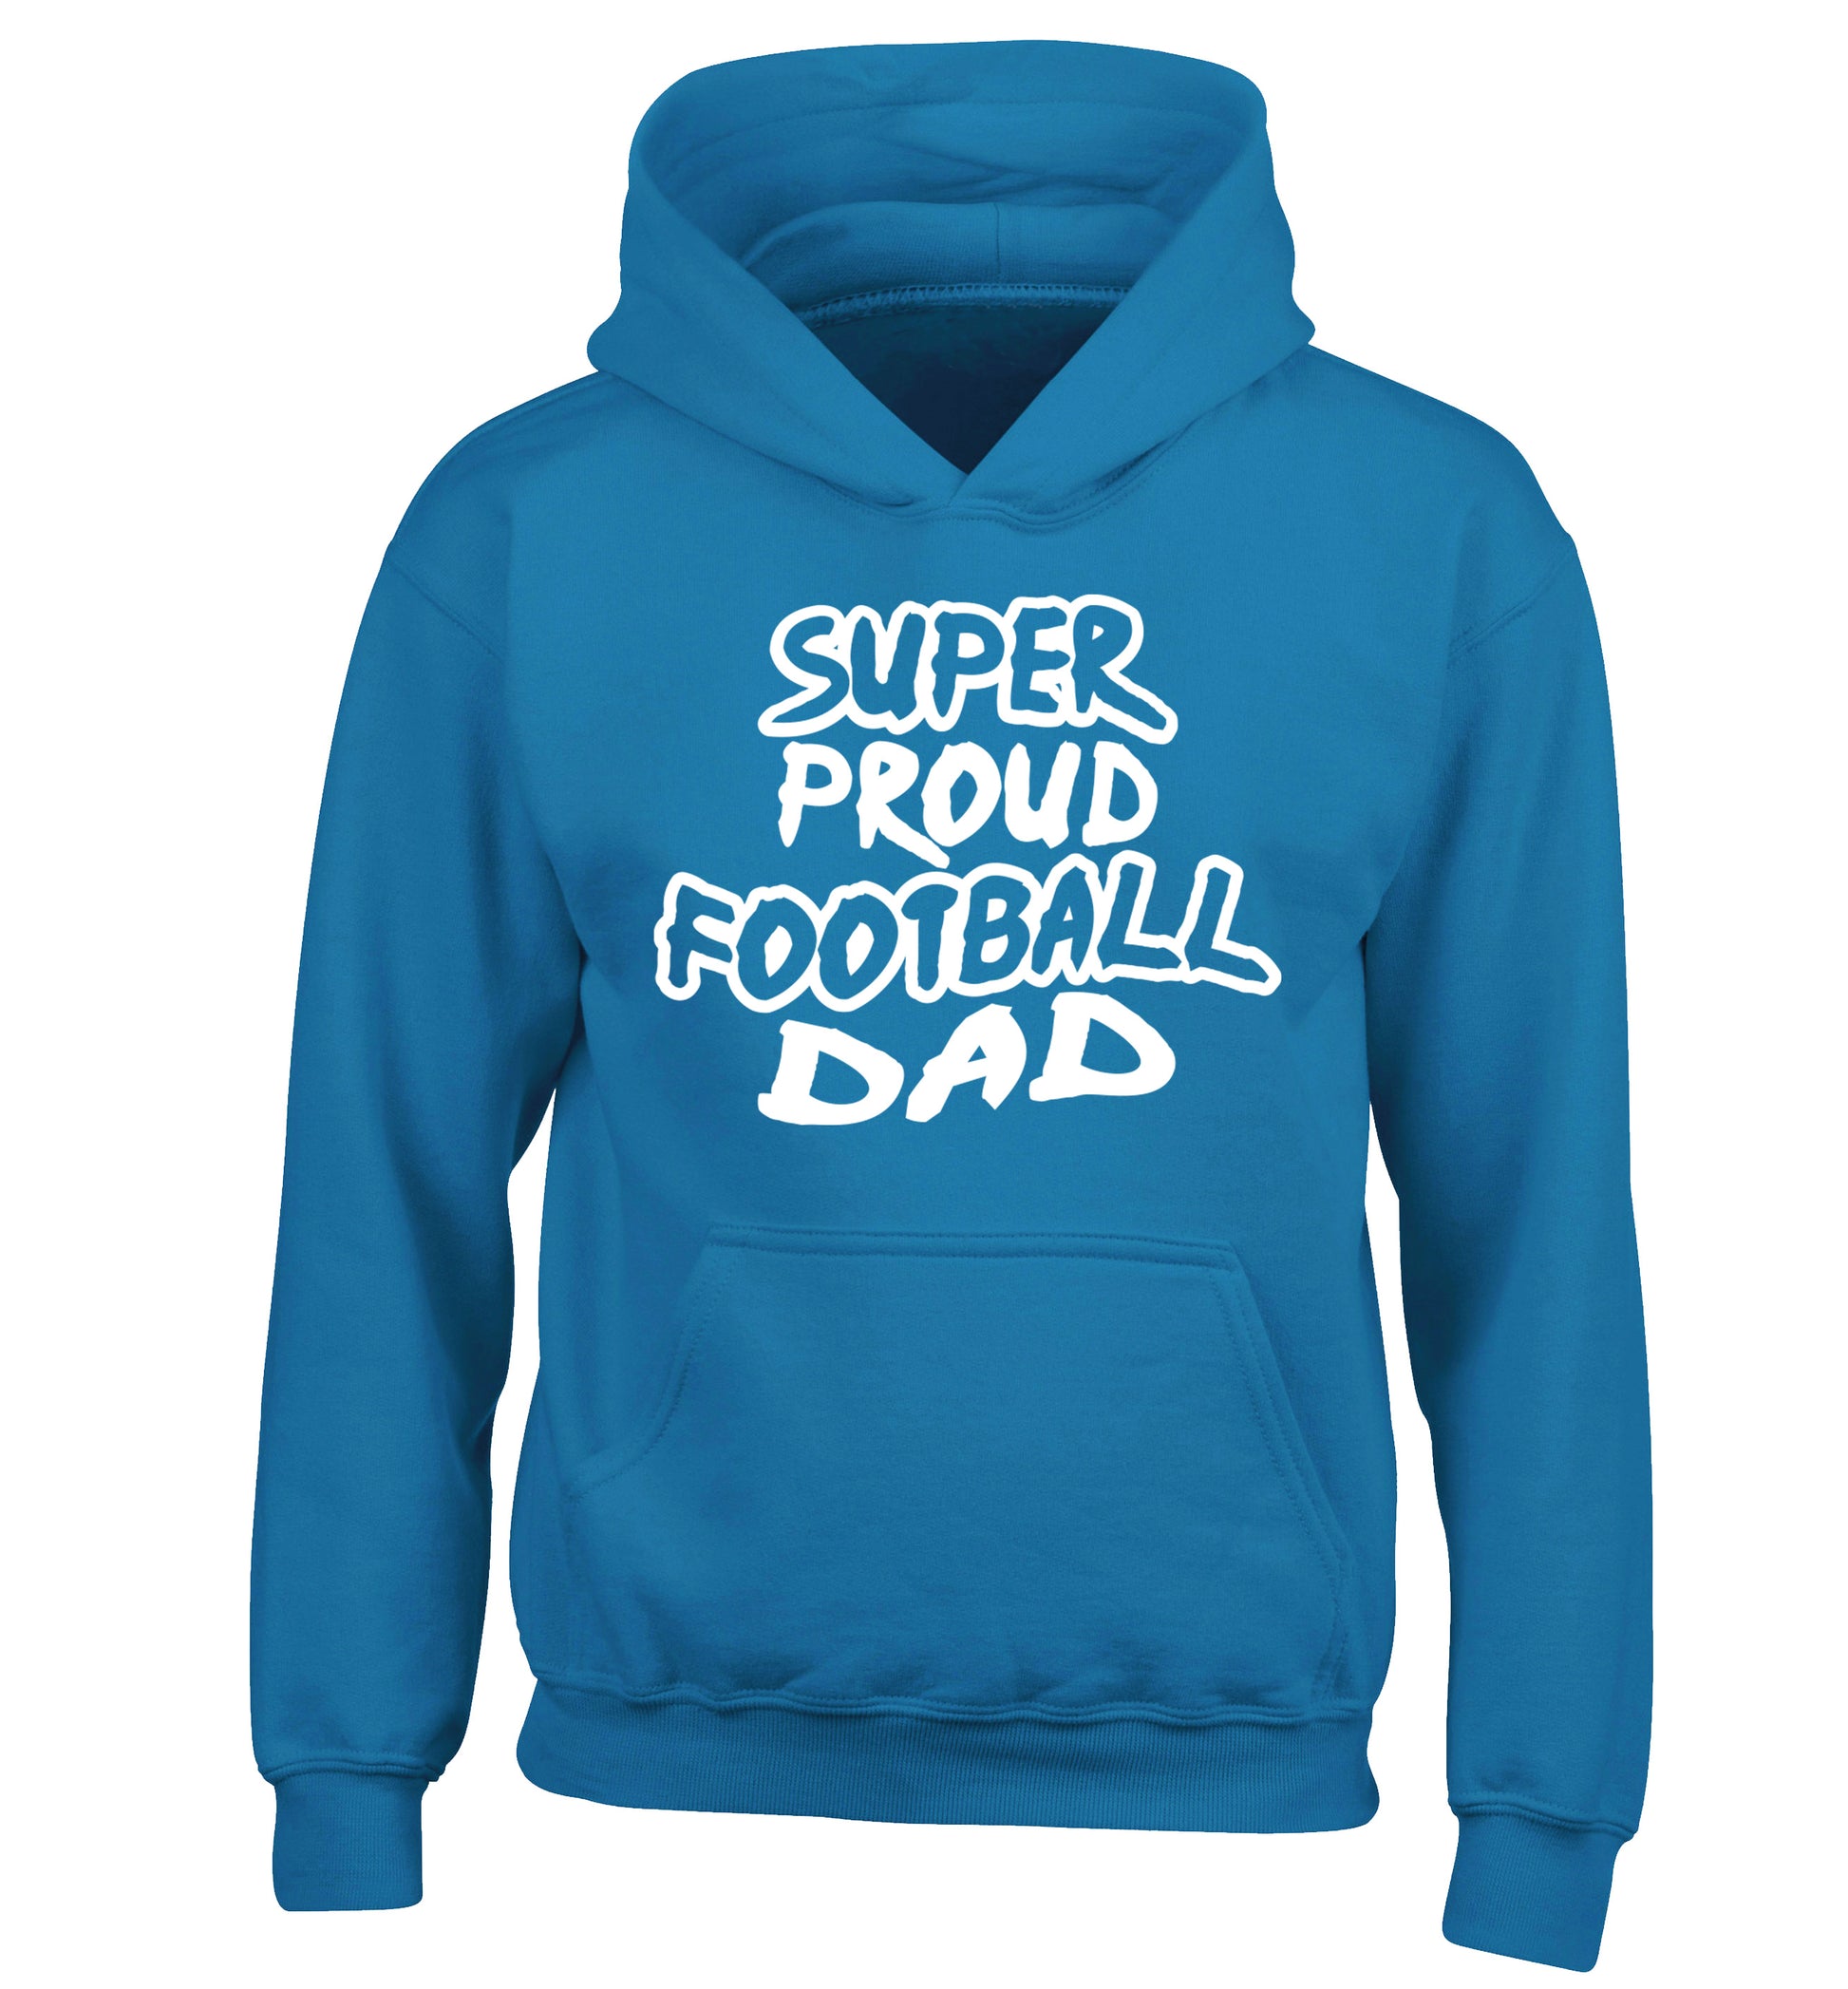 Super proud football dad children's blue hoodie 12-14 Years